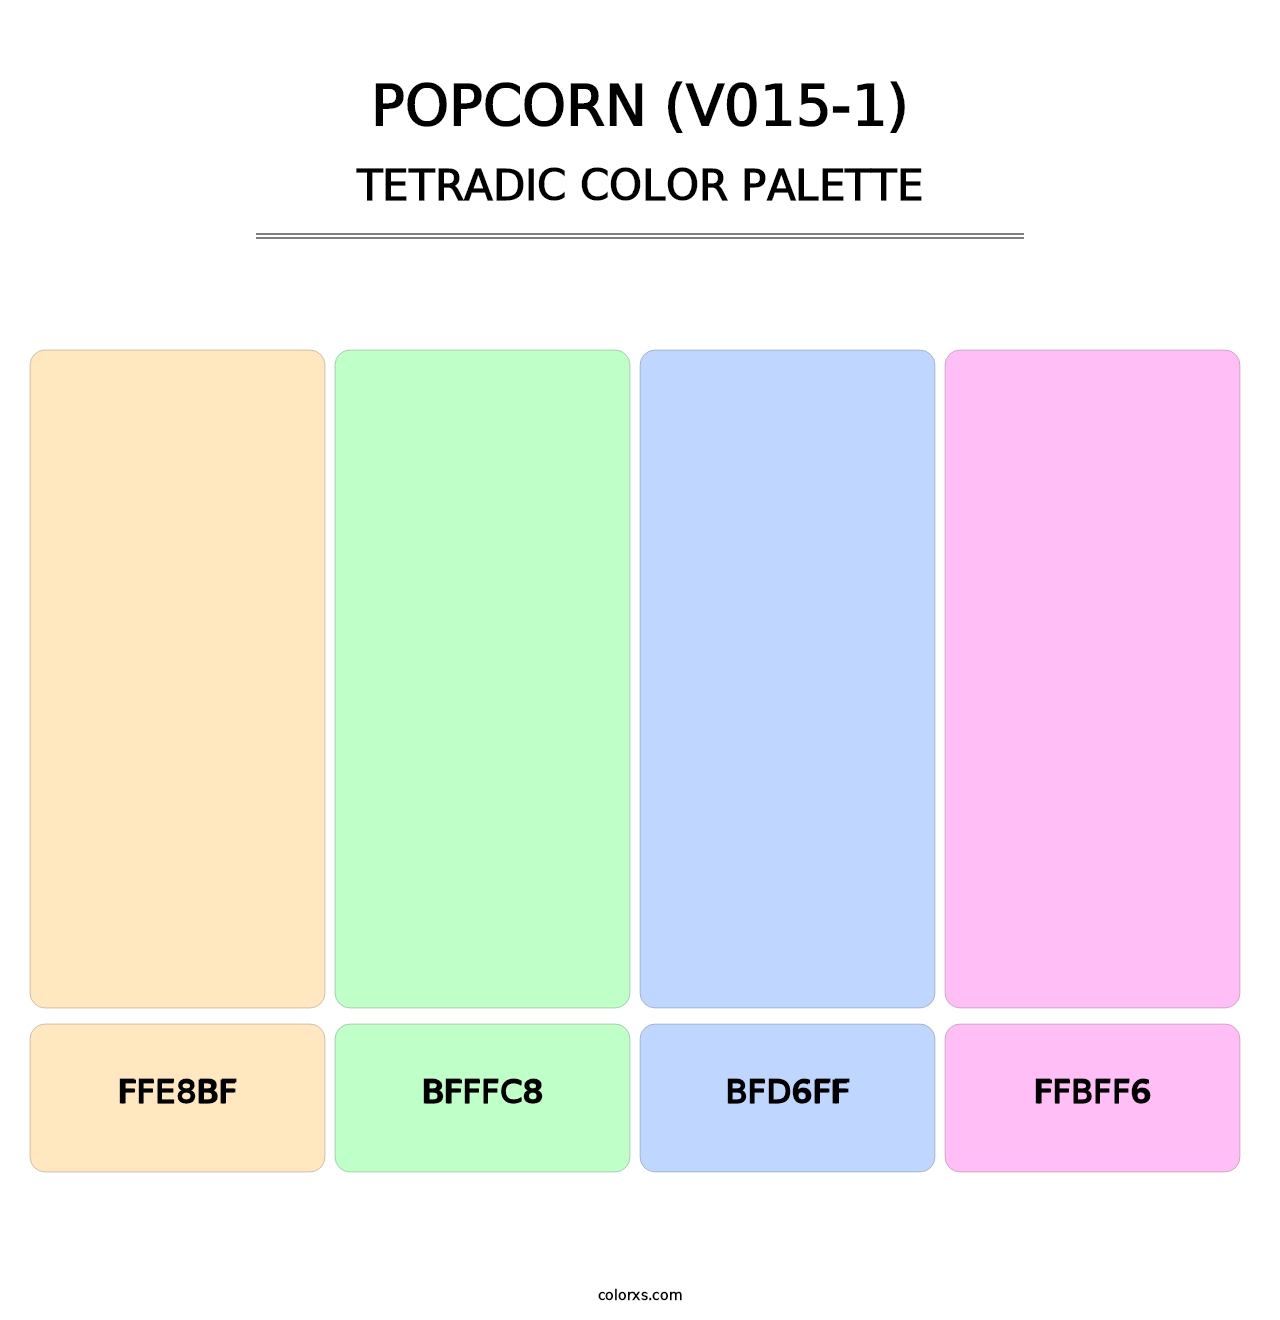 Popcorn (V015-1) - Tetradic Color Palette